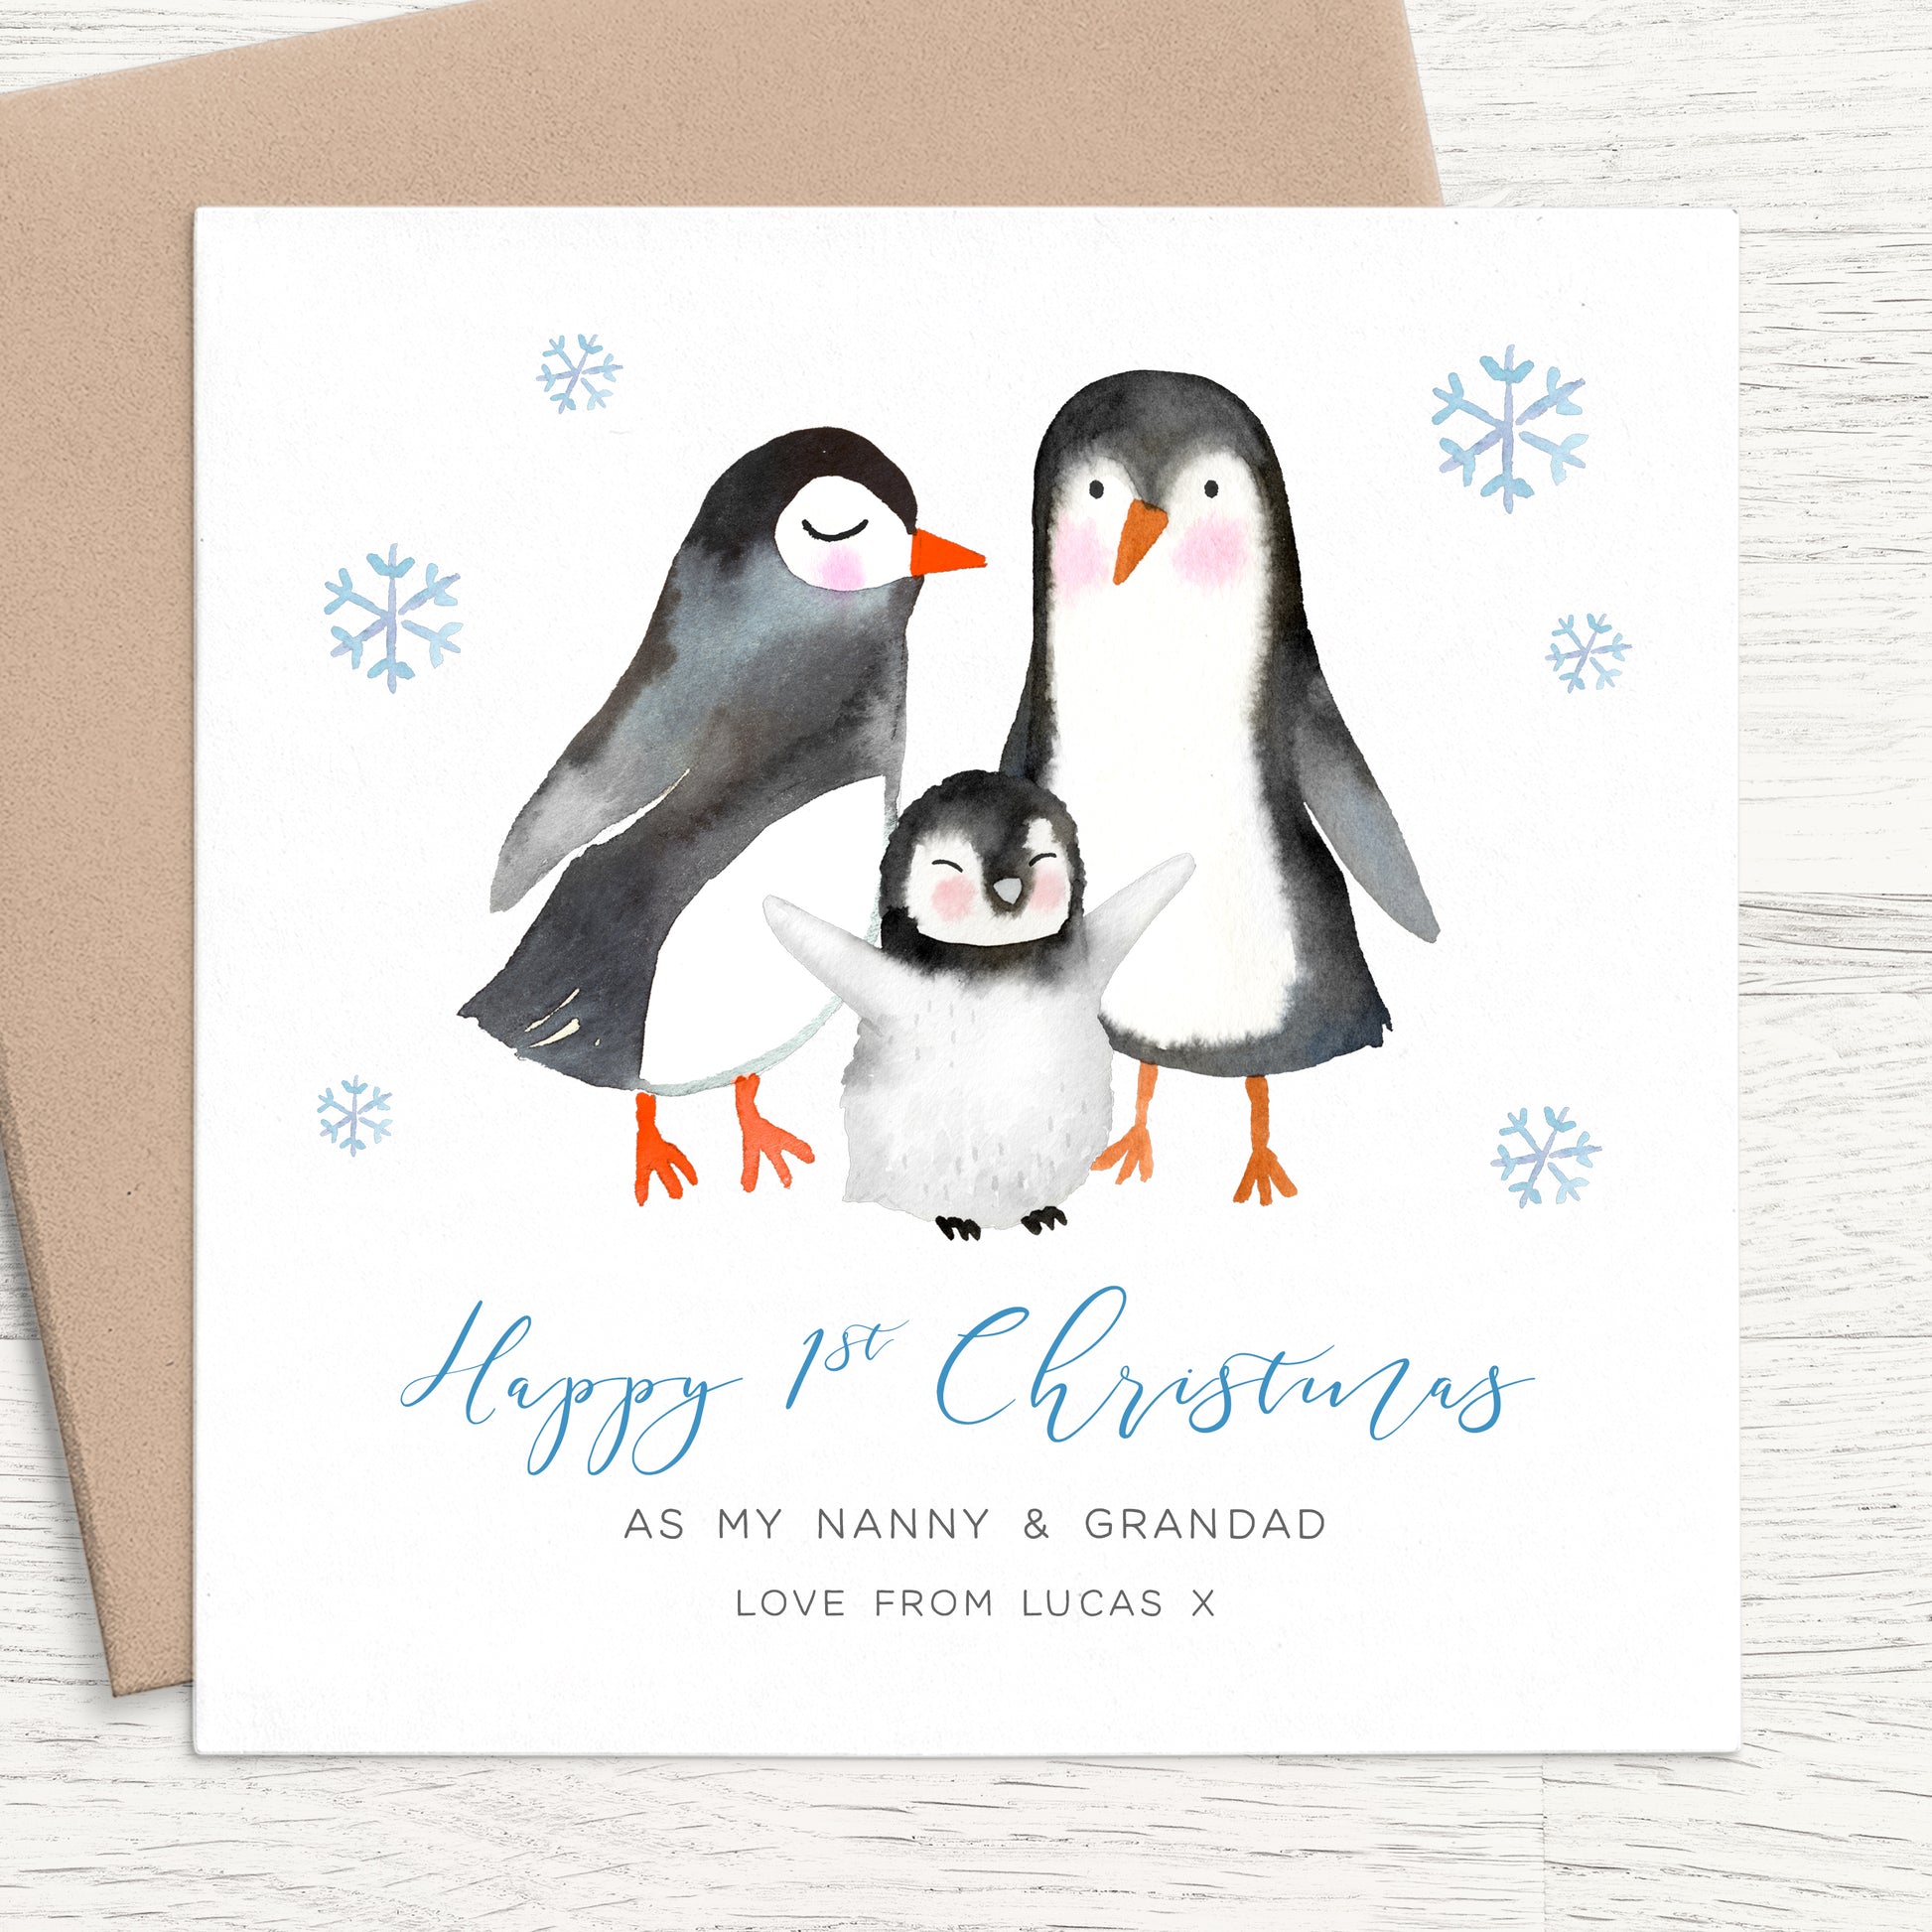 happy 1st christmas as my grandparents card personalised penguins kraft brown envelope matte white cardstock